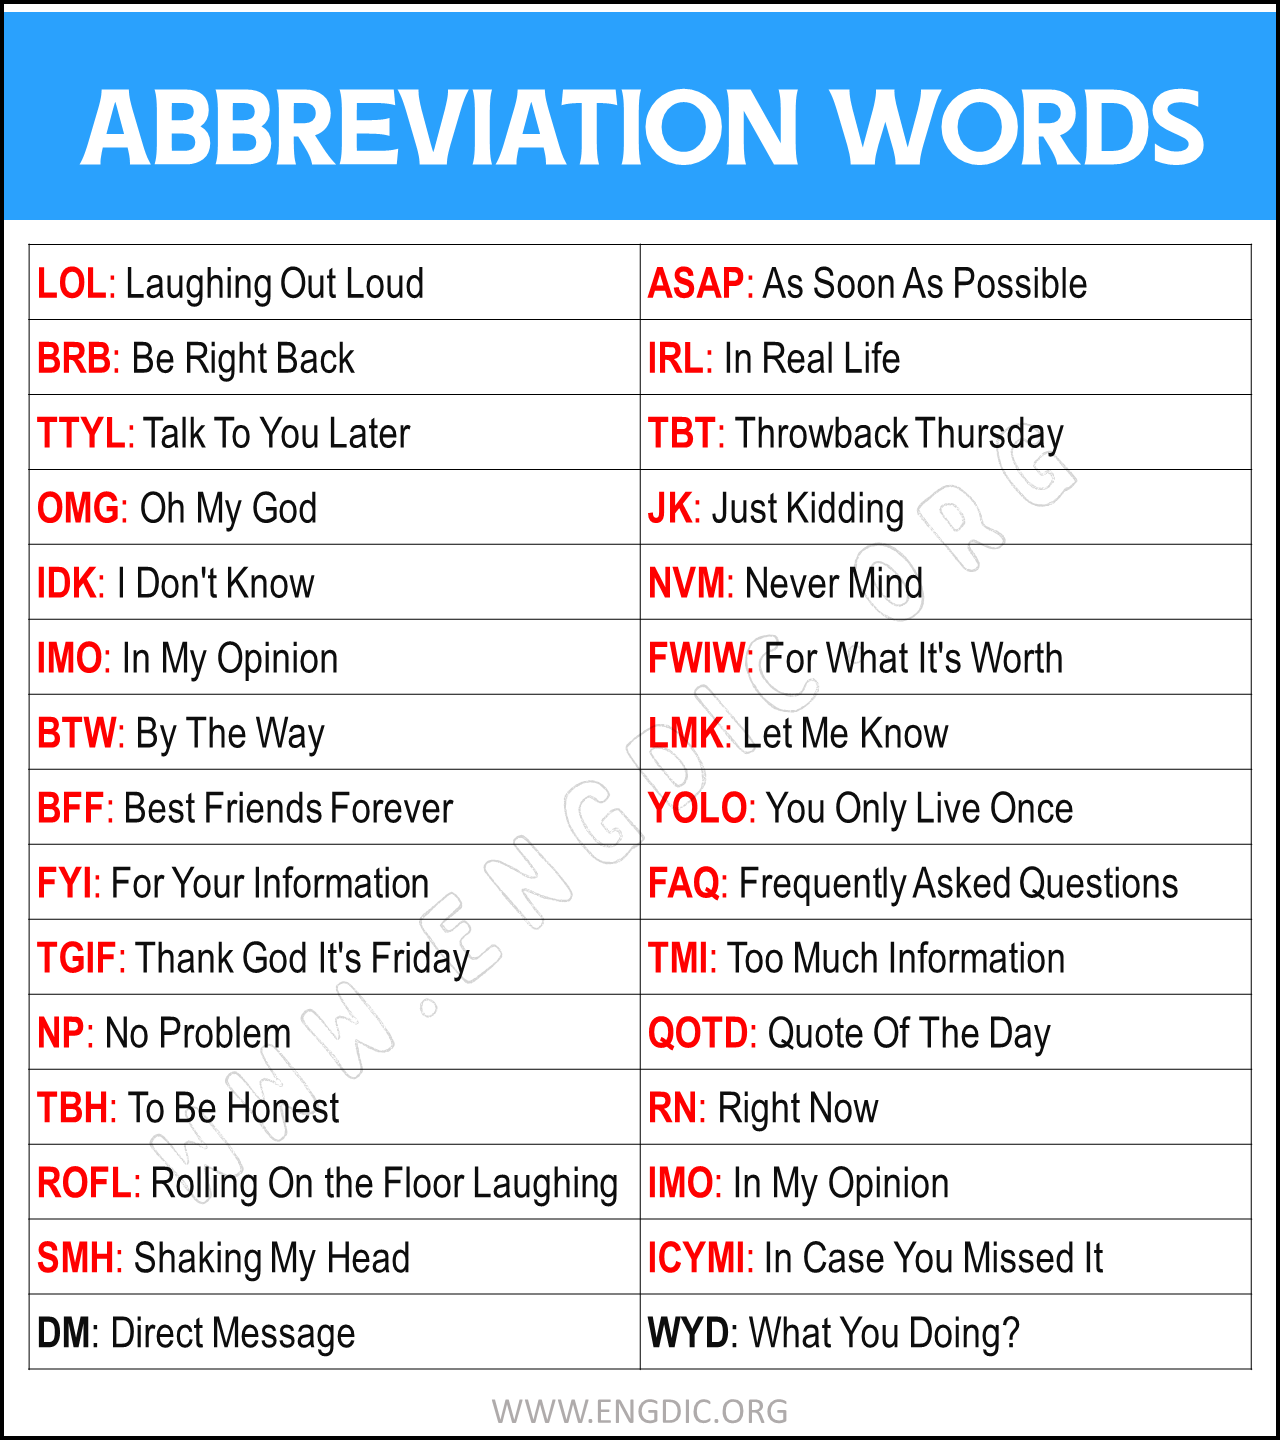 Abbreviation Words